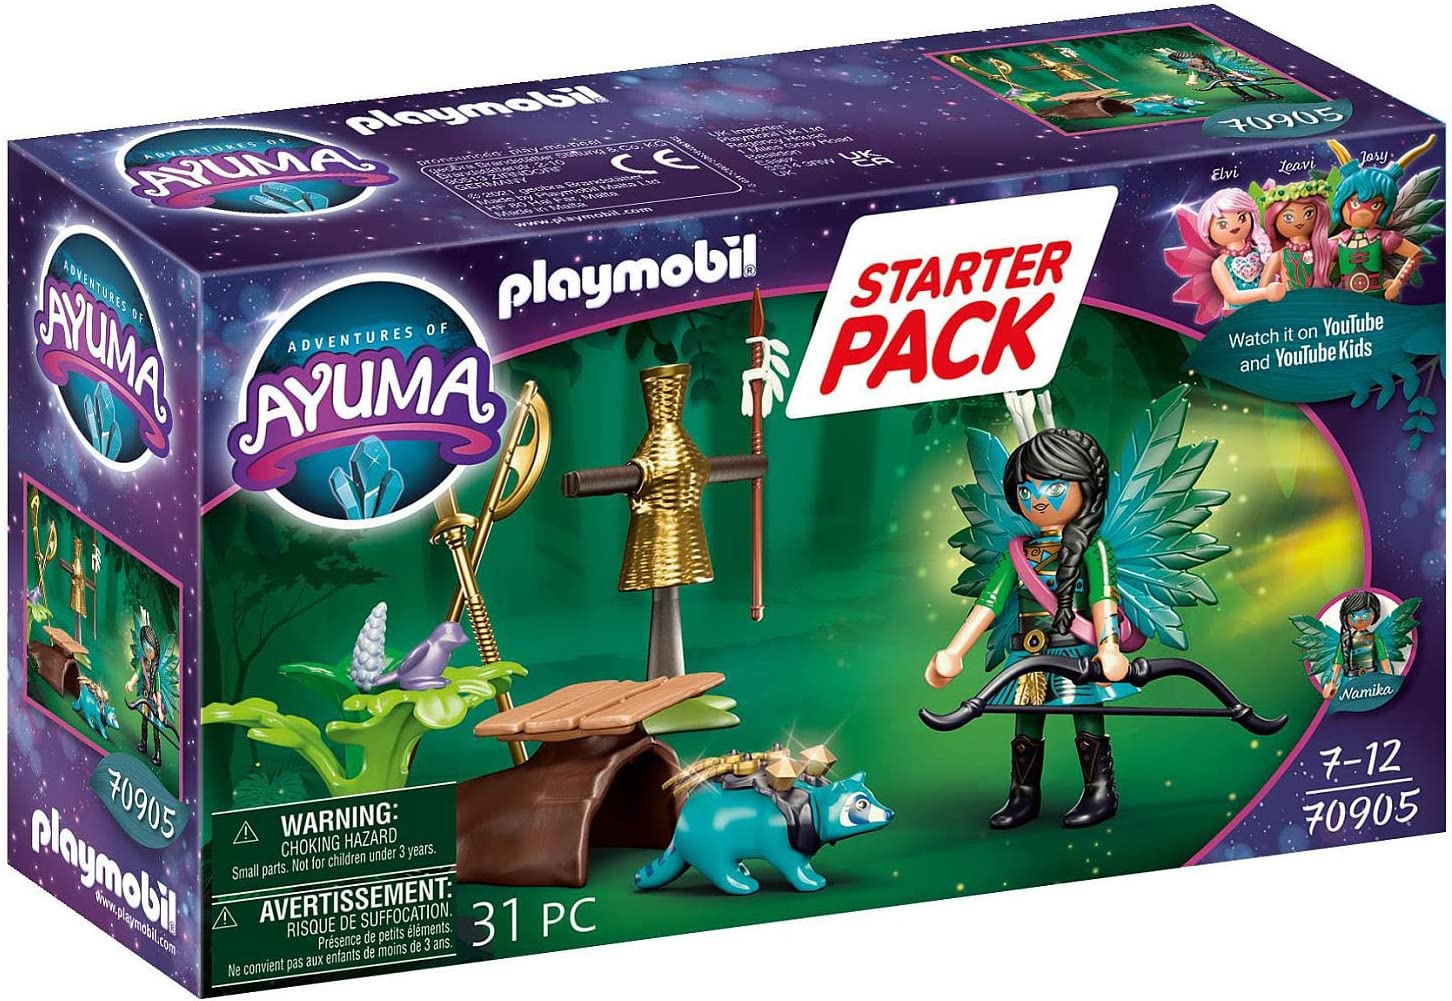 Playmobil Adventures of Ayuma Crystal Fairy with Unicorn